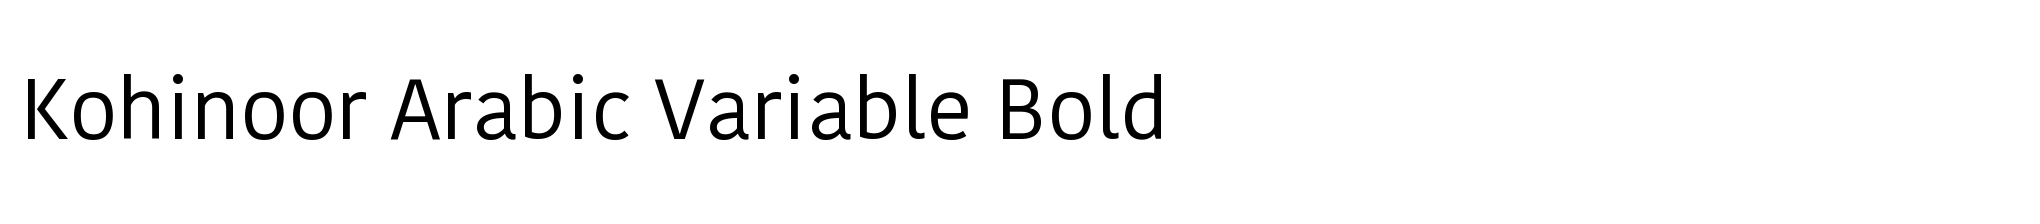 Kohinoor Arabic Variable Bold image